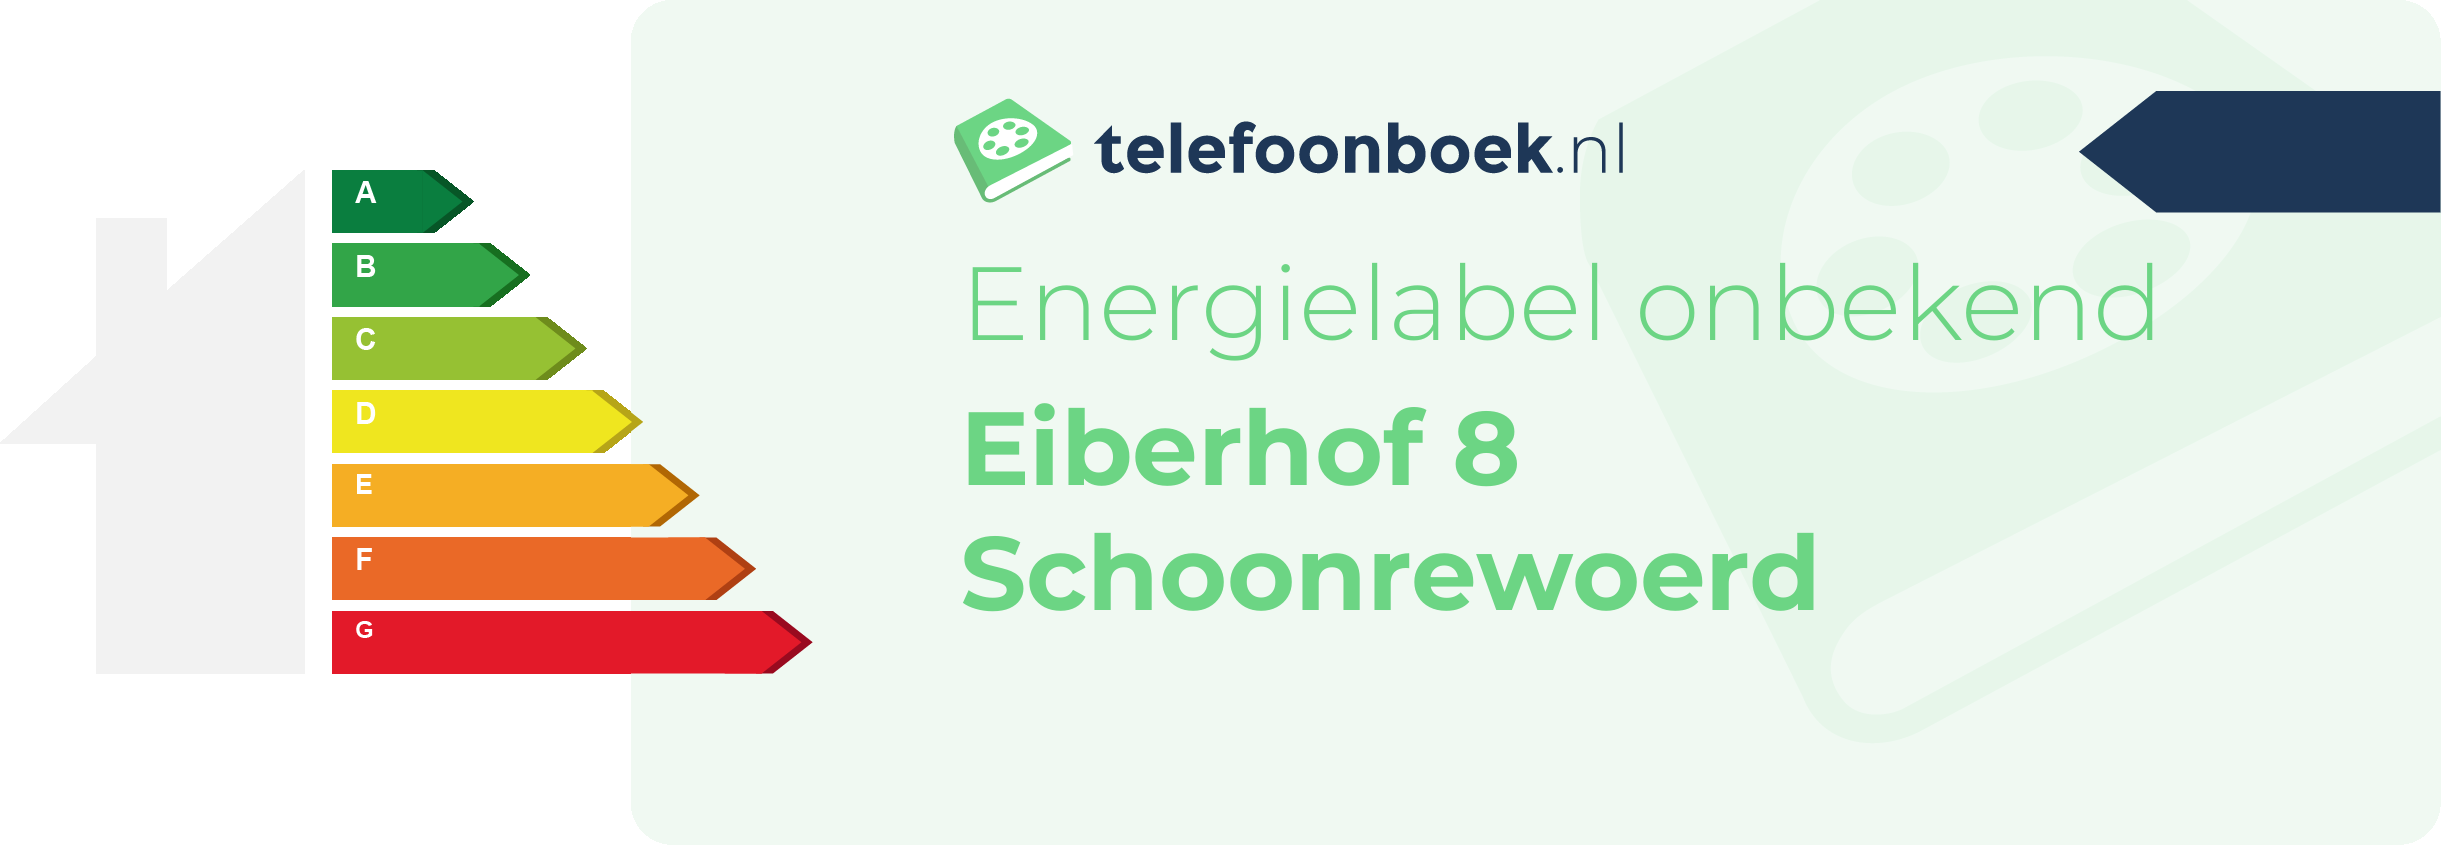 Energielabel Eiberhof 8 Schoonrewoerd